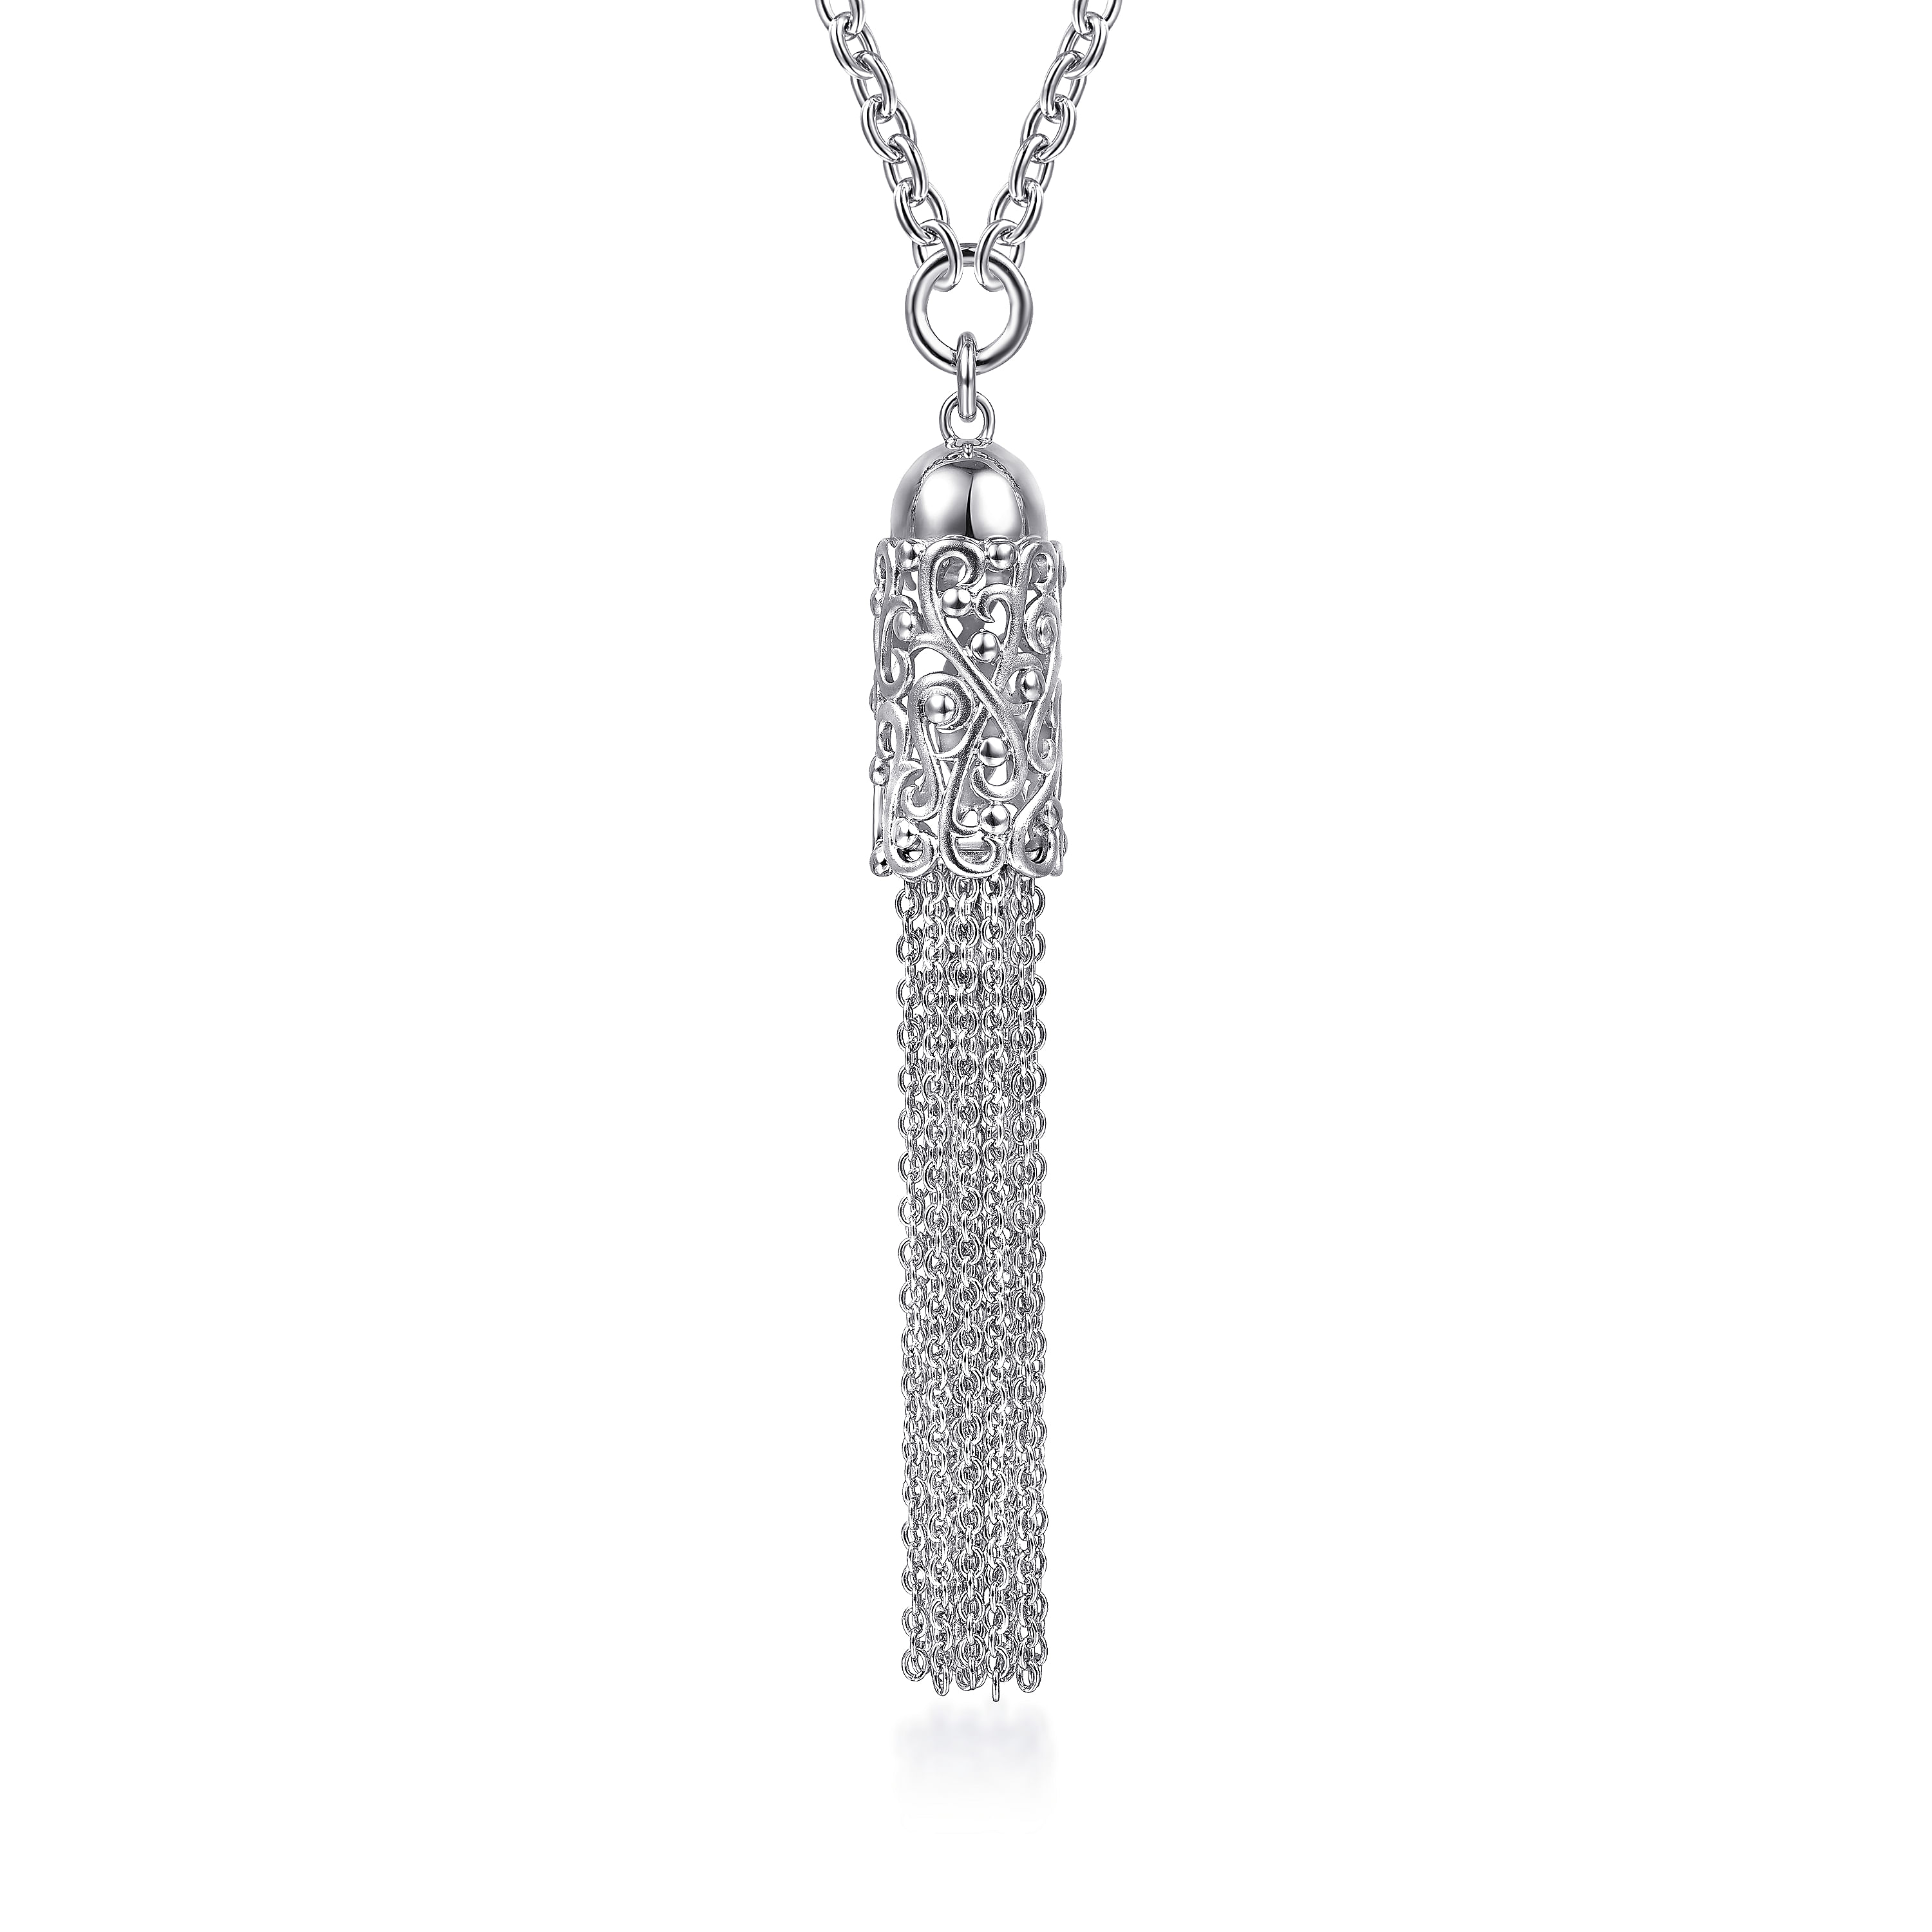 30 inch Vintage Inspired 925 Sterling Silver Tassel Necklace